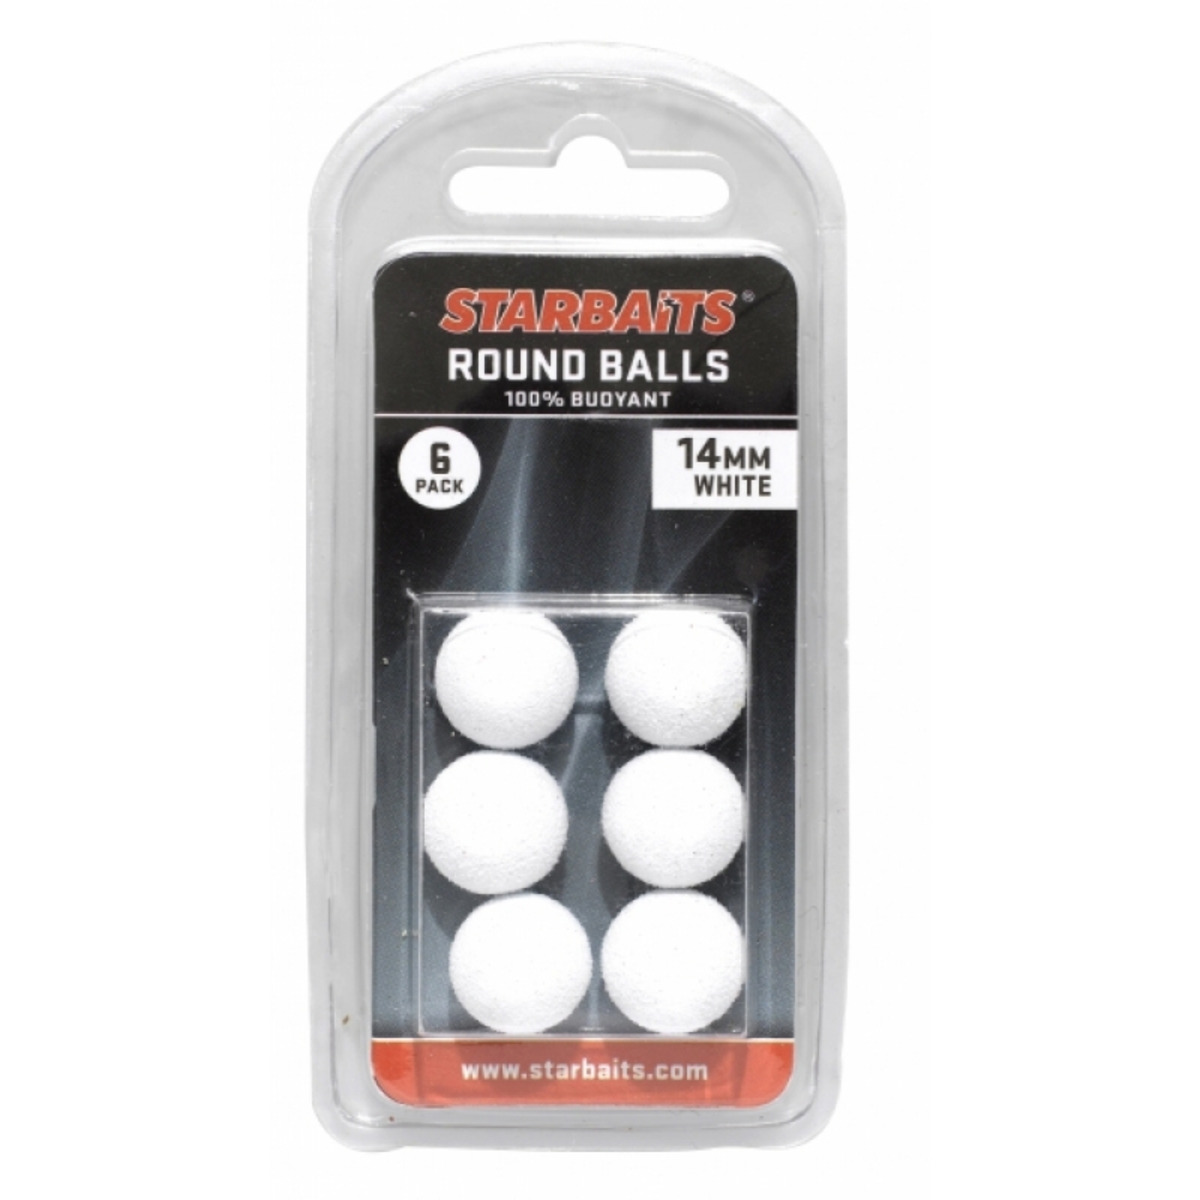 Starbaits Round Balls 14mm - White